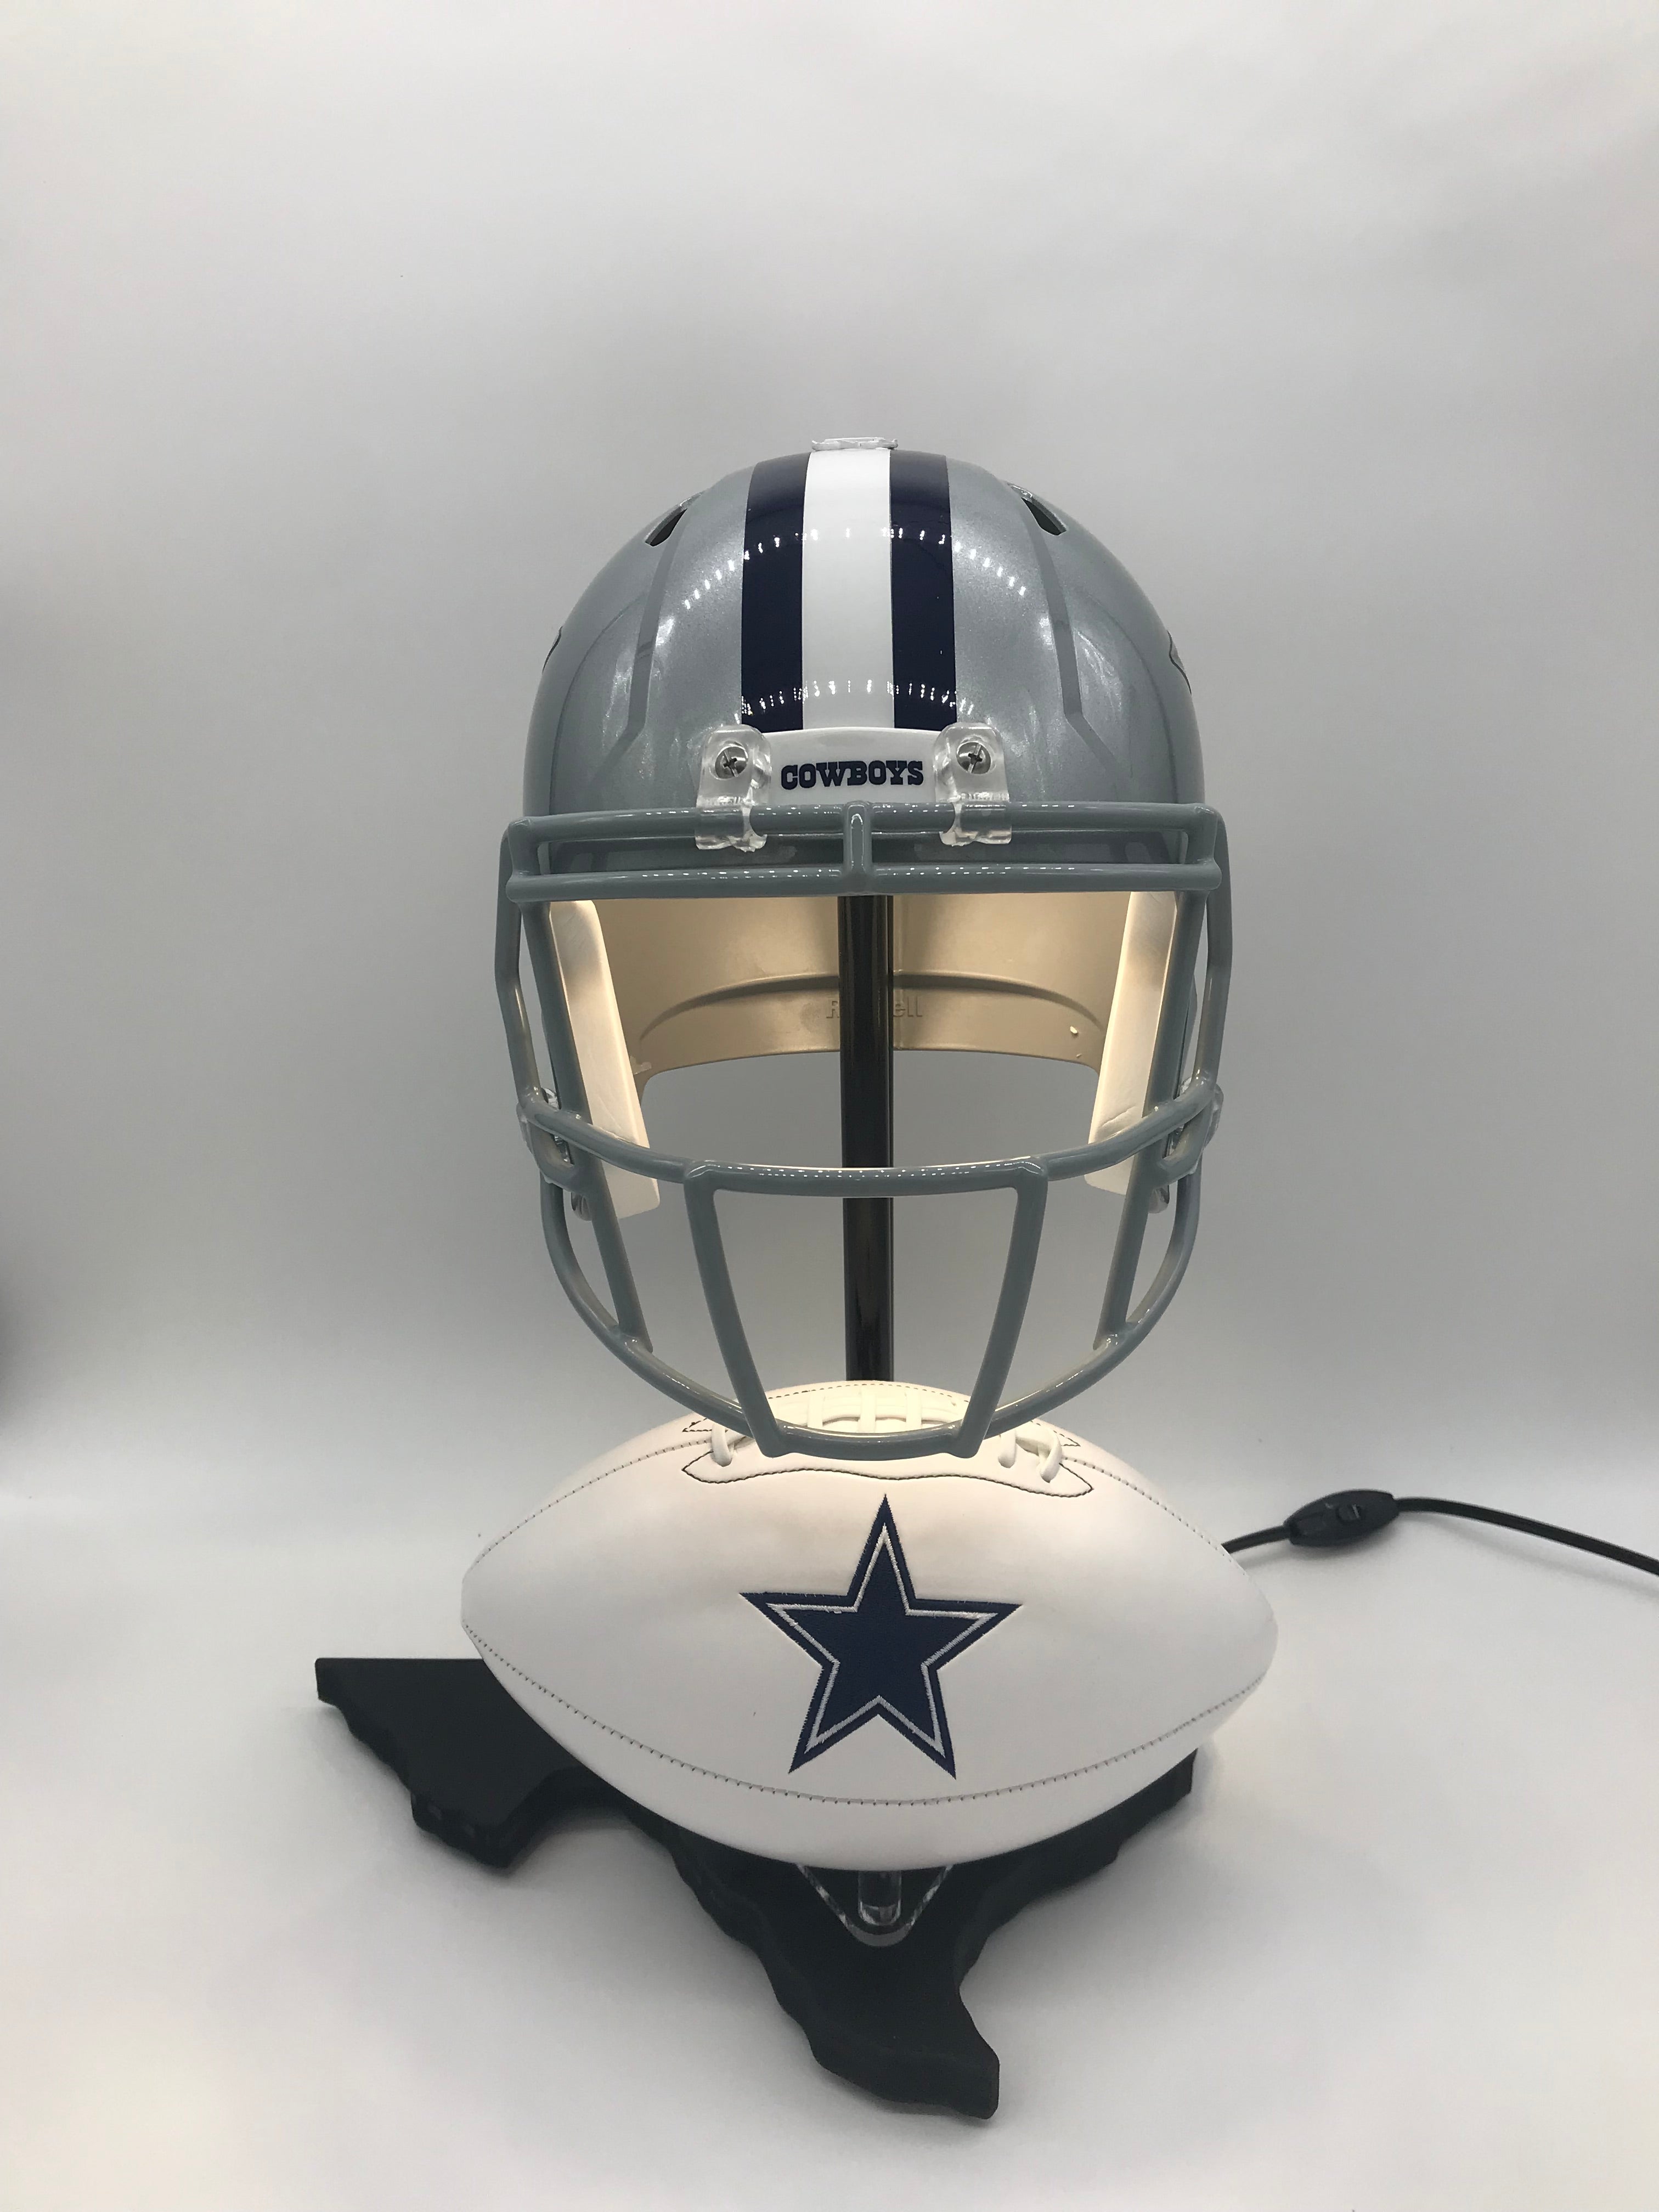 cowboy new helmet